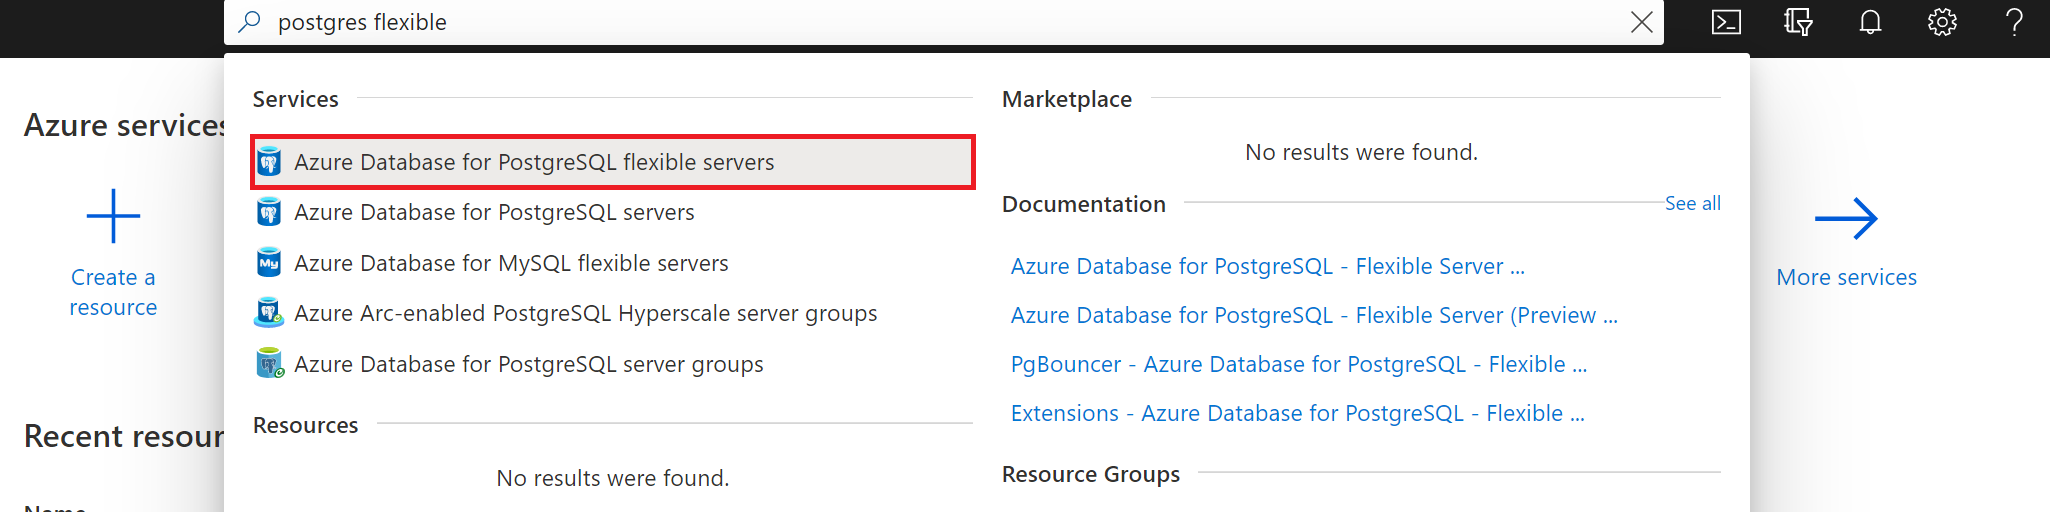 [Azure Database for PostgreSQL サーバー] の検索を示すスクリーンショット。